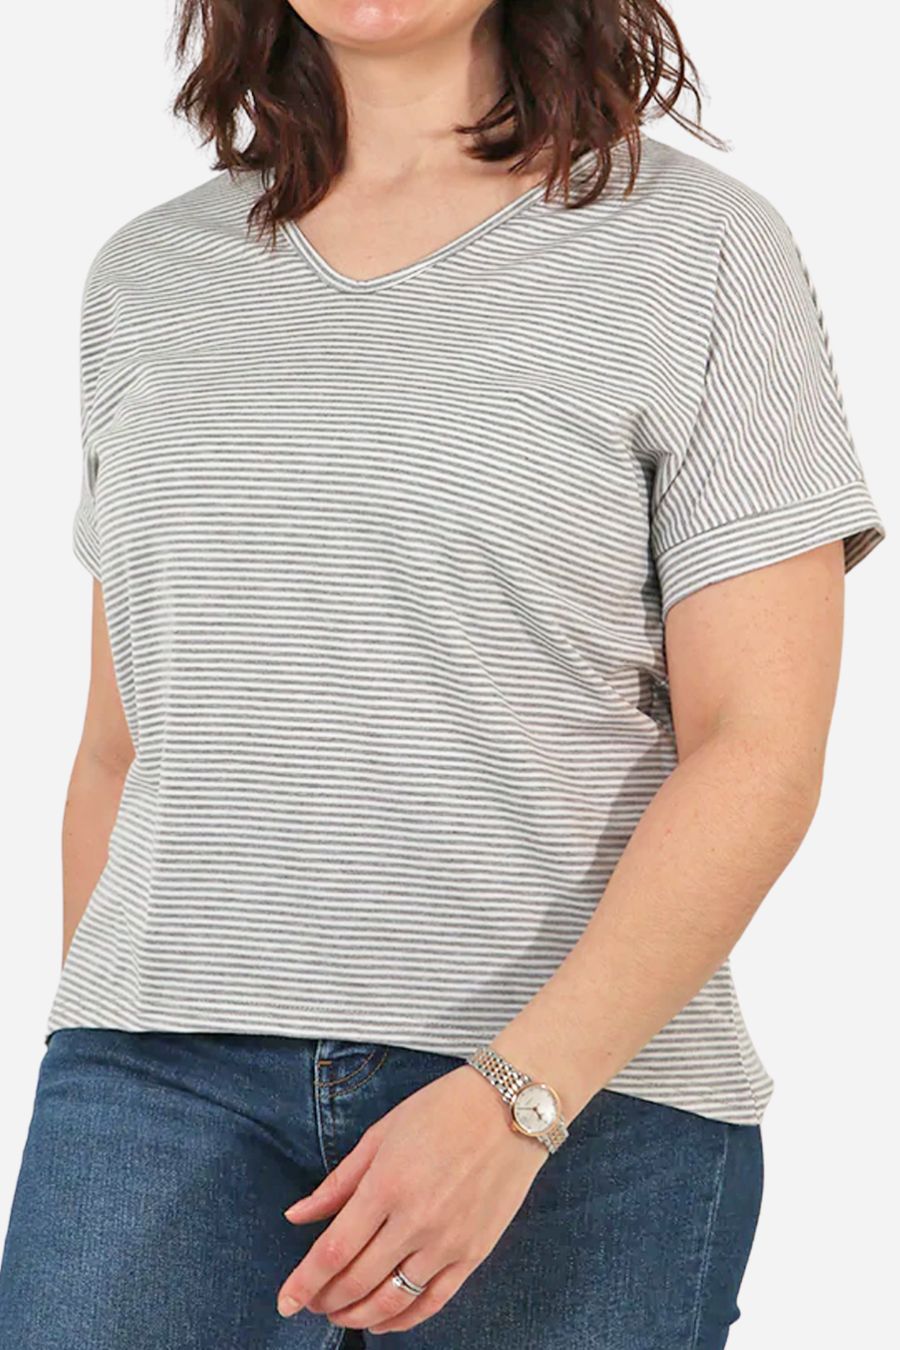 Grey Striped Short Sleeve Top